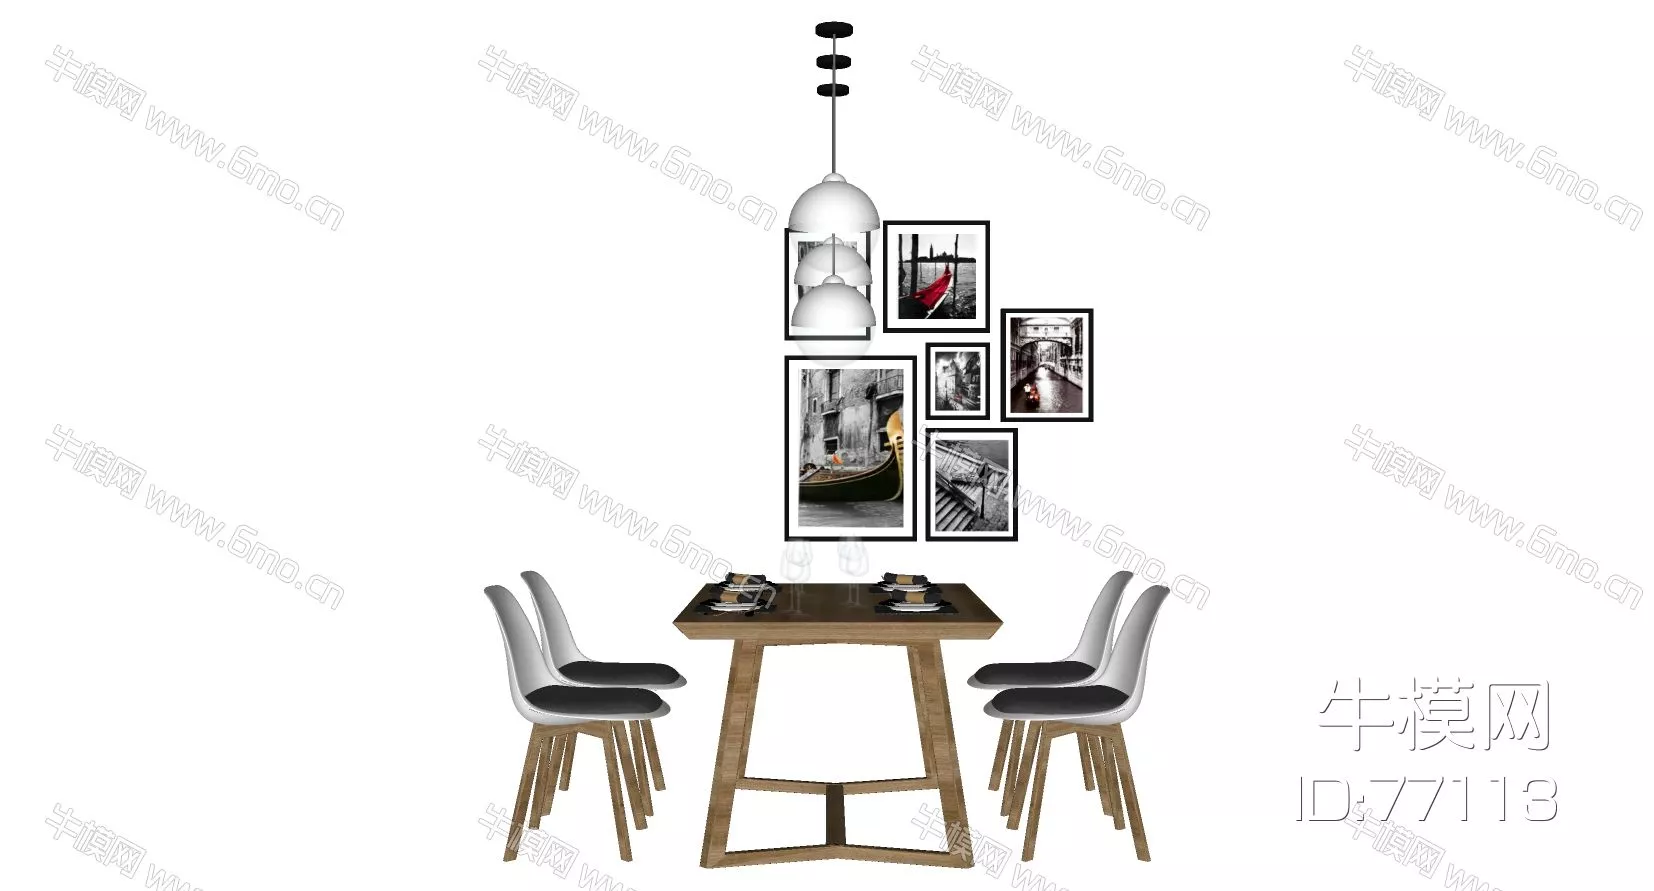 NORDIC DINING TABLE SET - SKETCHUP 3D MODEL - ENSCAPE - 77113